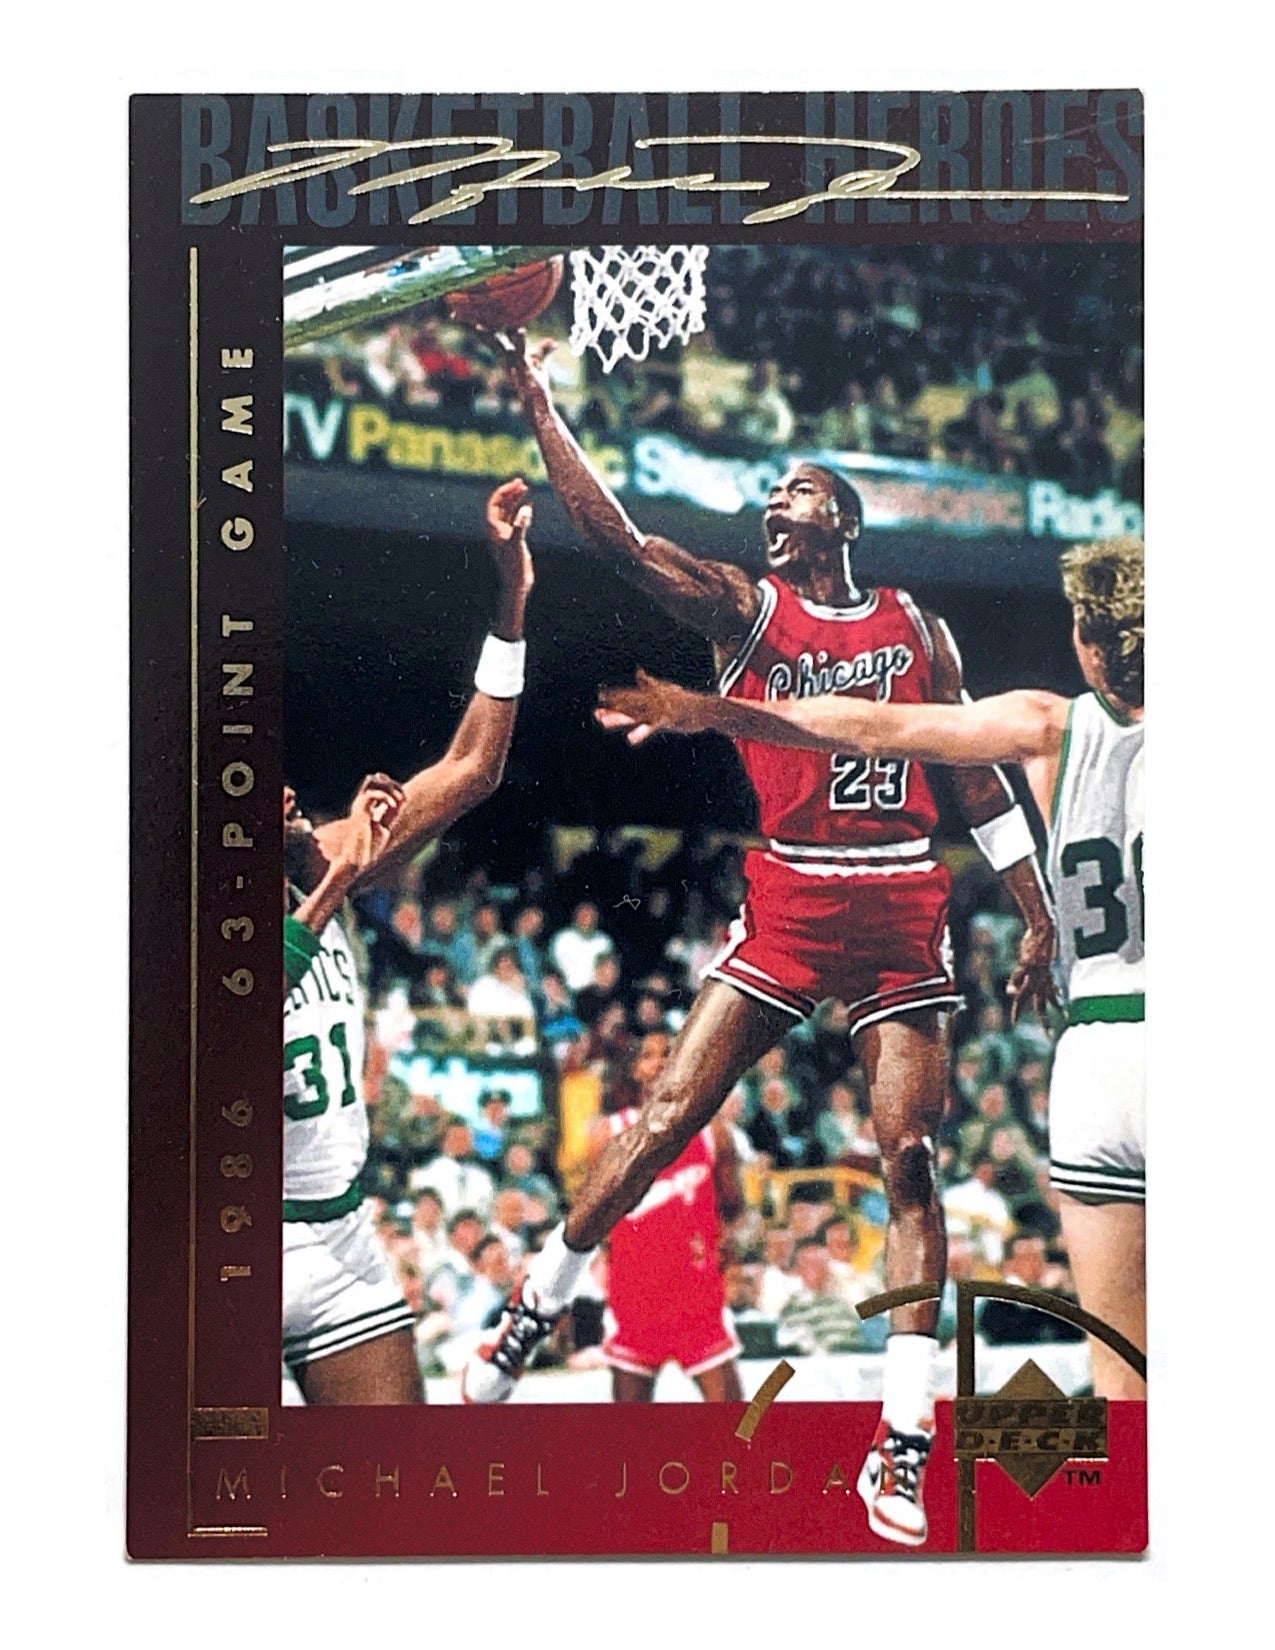 Michael Jordan 1994-95 Upper Deck 1986 63-Point Game #38